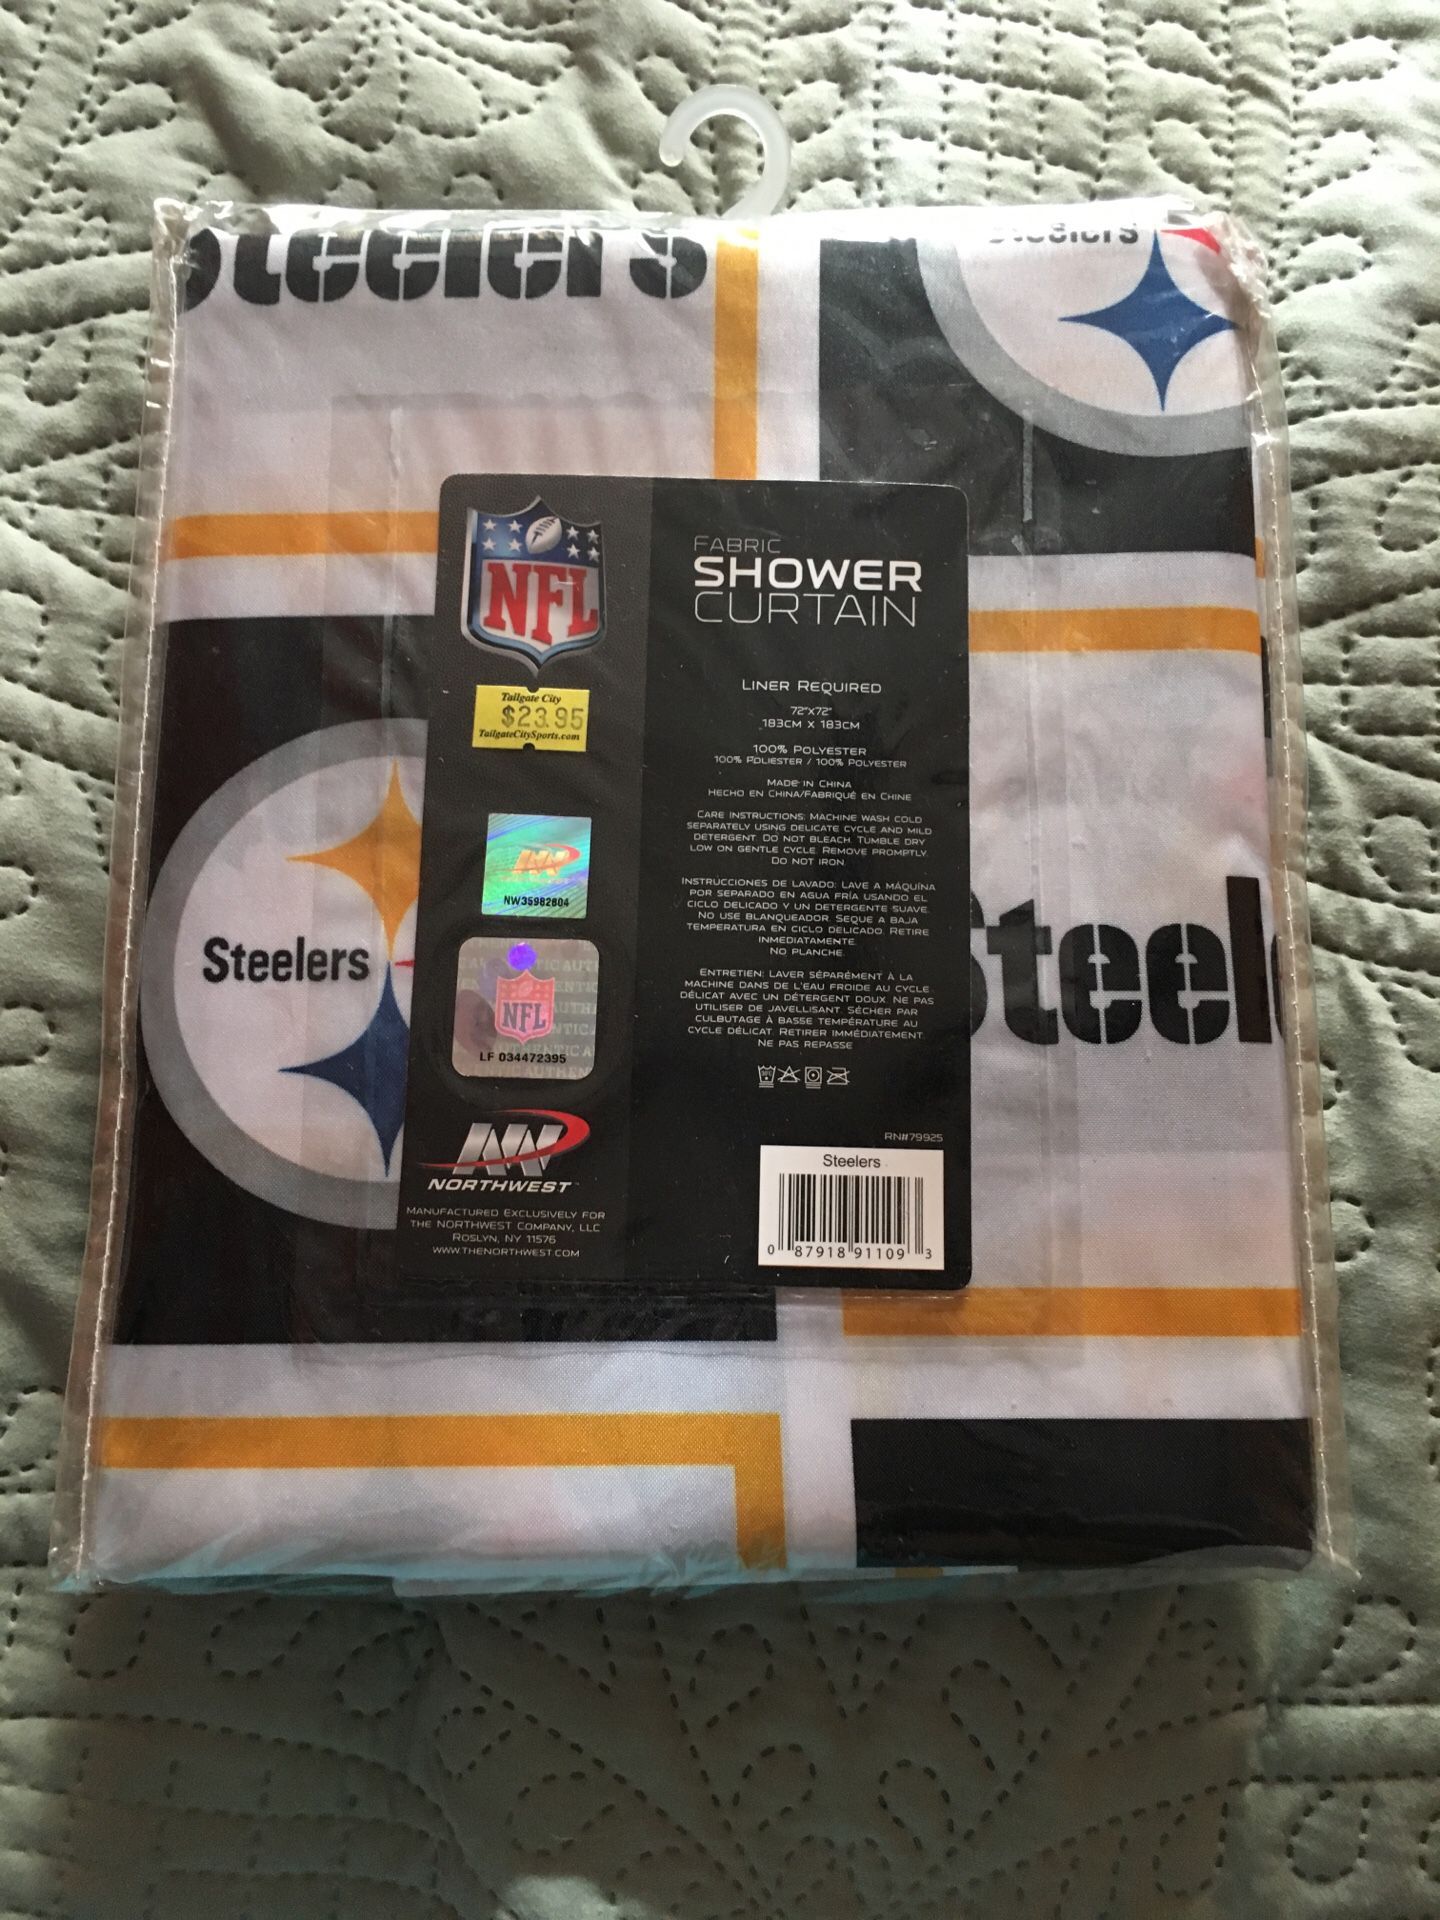 Steelers shower curtain